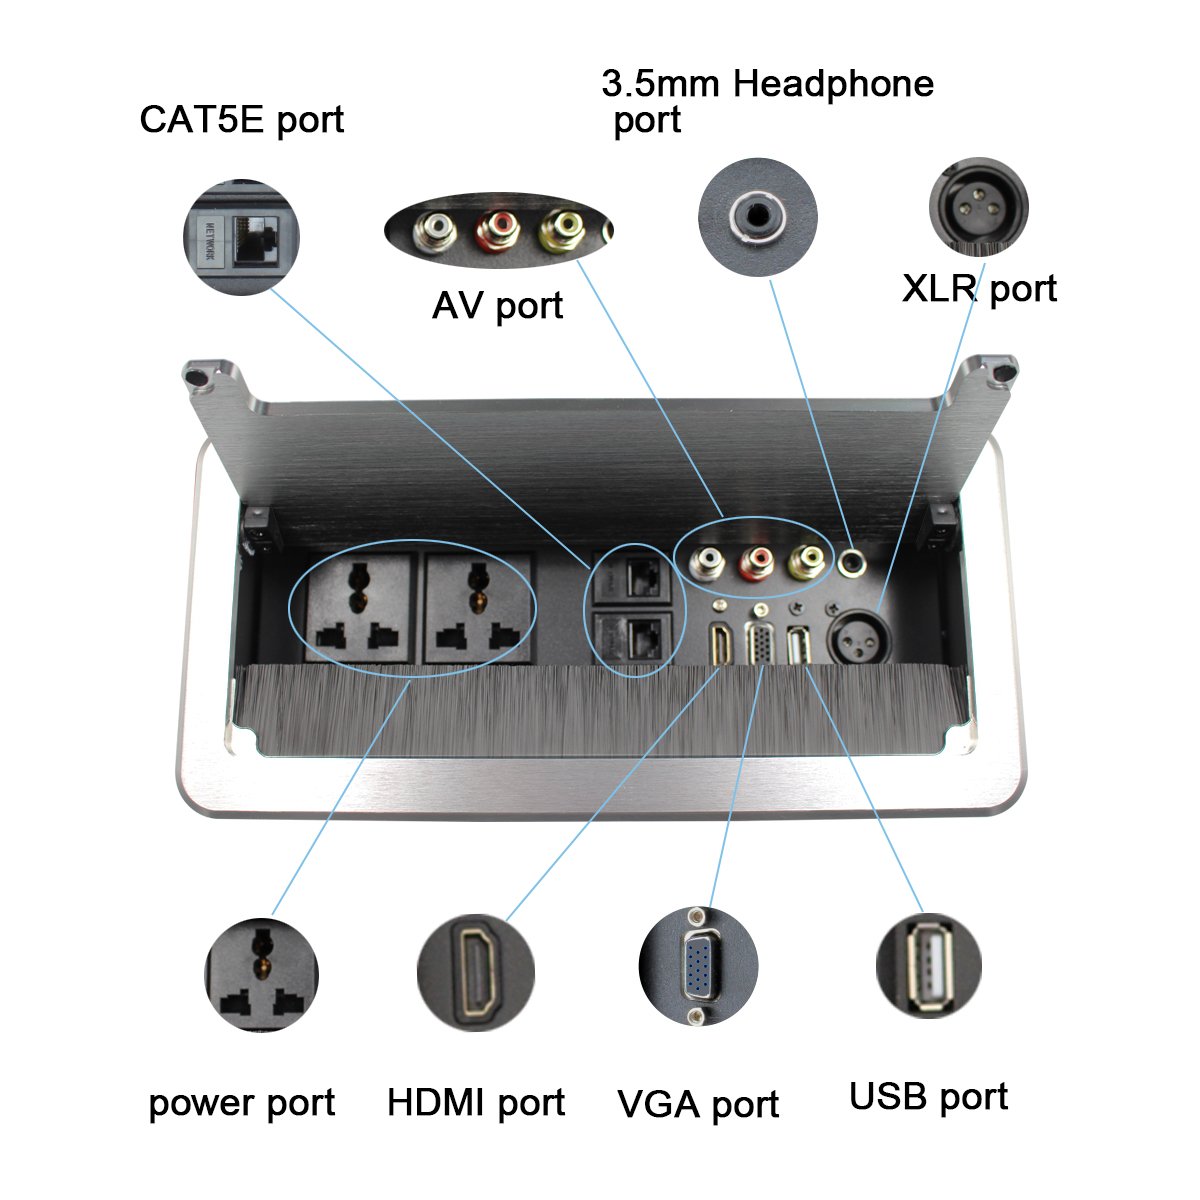 Caja de conectividad para mesa de conferencia CAT 5E, HDMI, USB, VGA, XLR, AV, puerto para auriculares de 3.5 mm